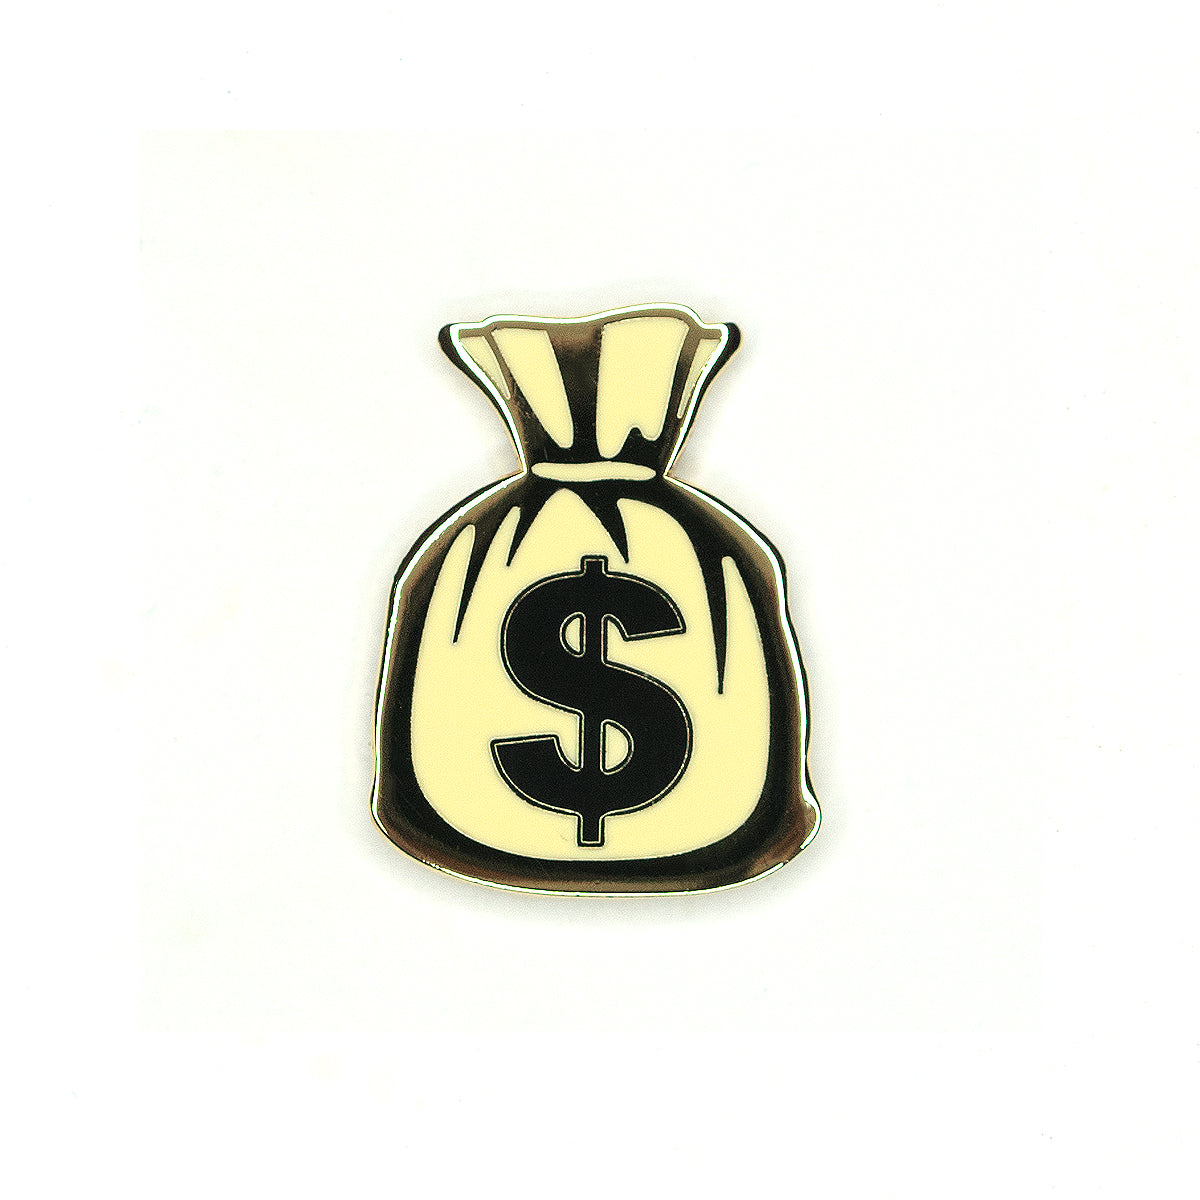 Pin on Money bag